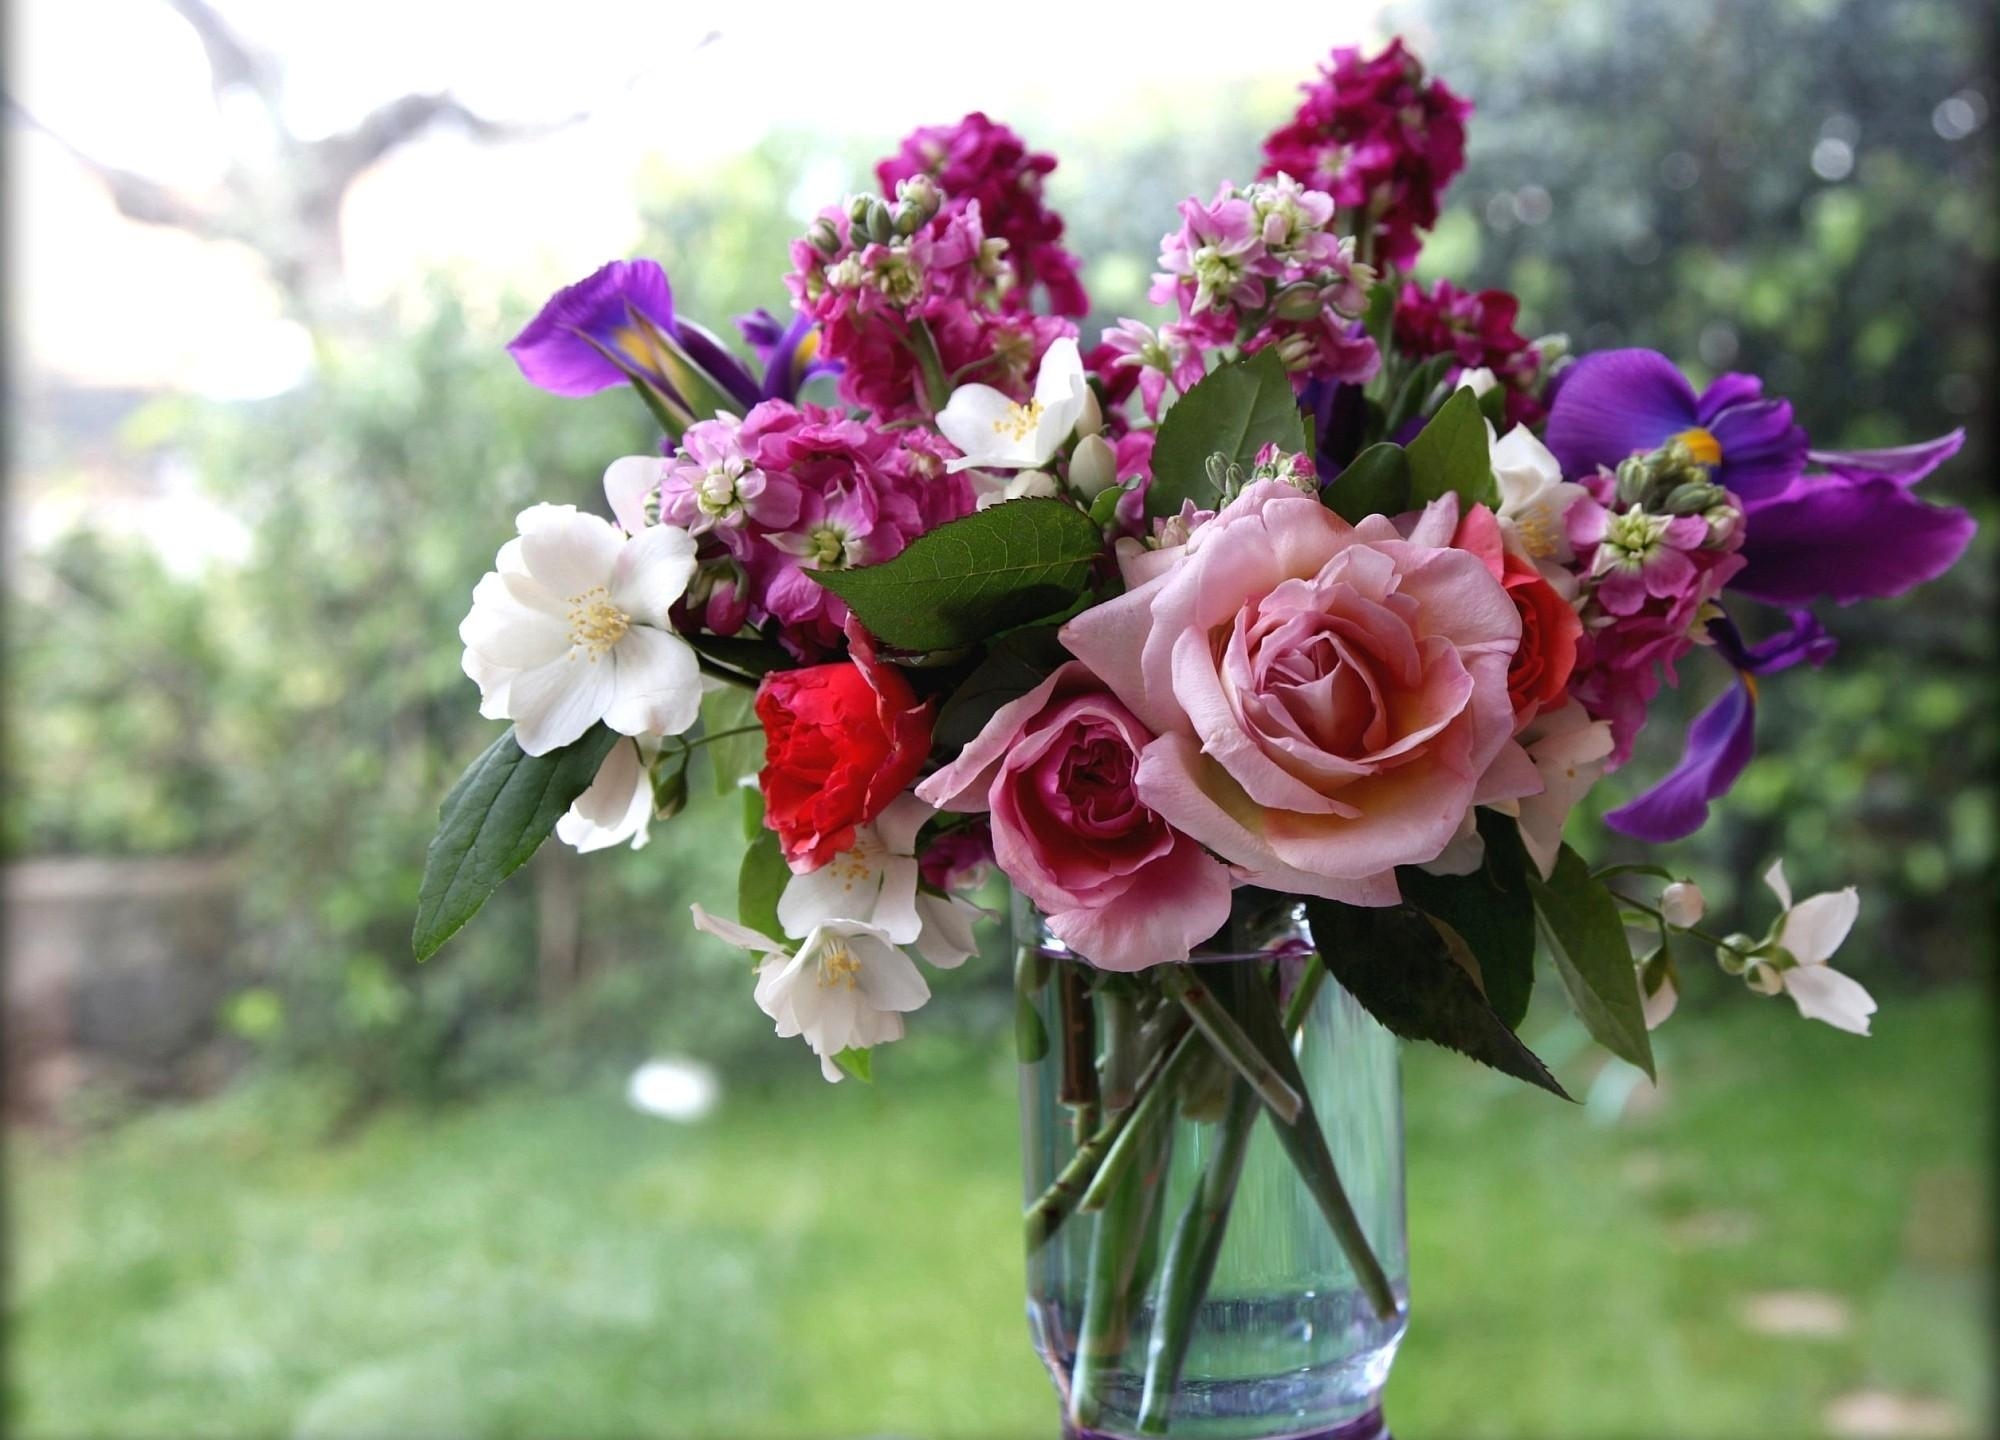 Phone wallpaper: Flowers, Roses, Bouquet, Window, Vase, Jasmine free downlo...